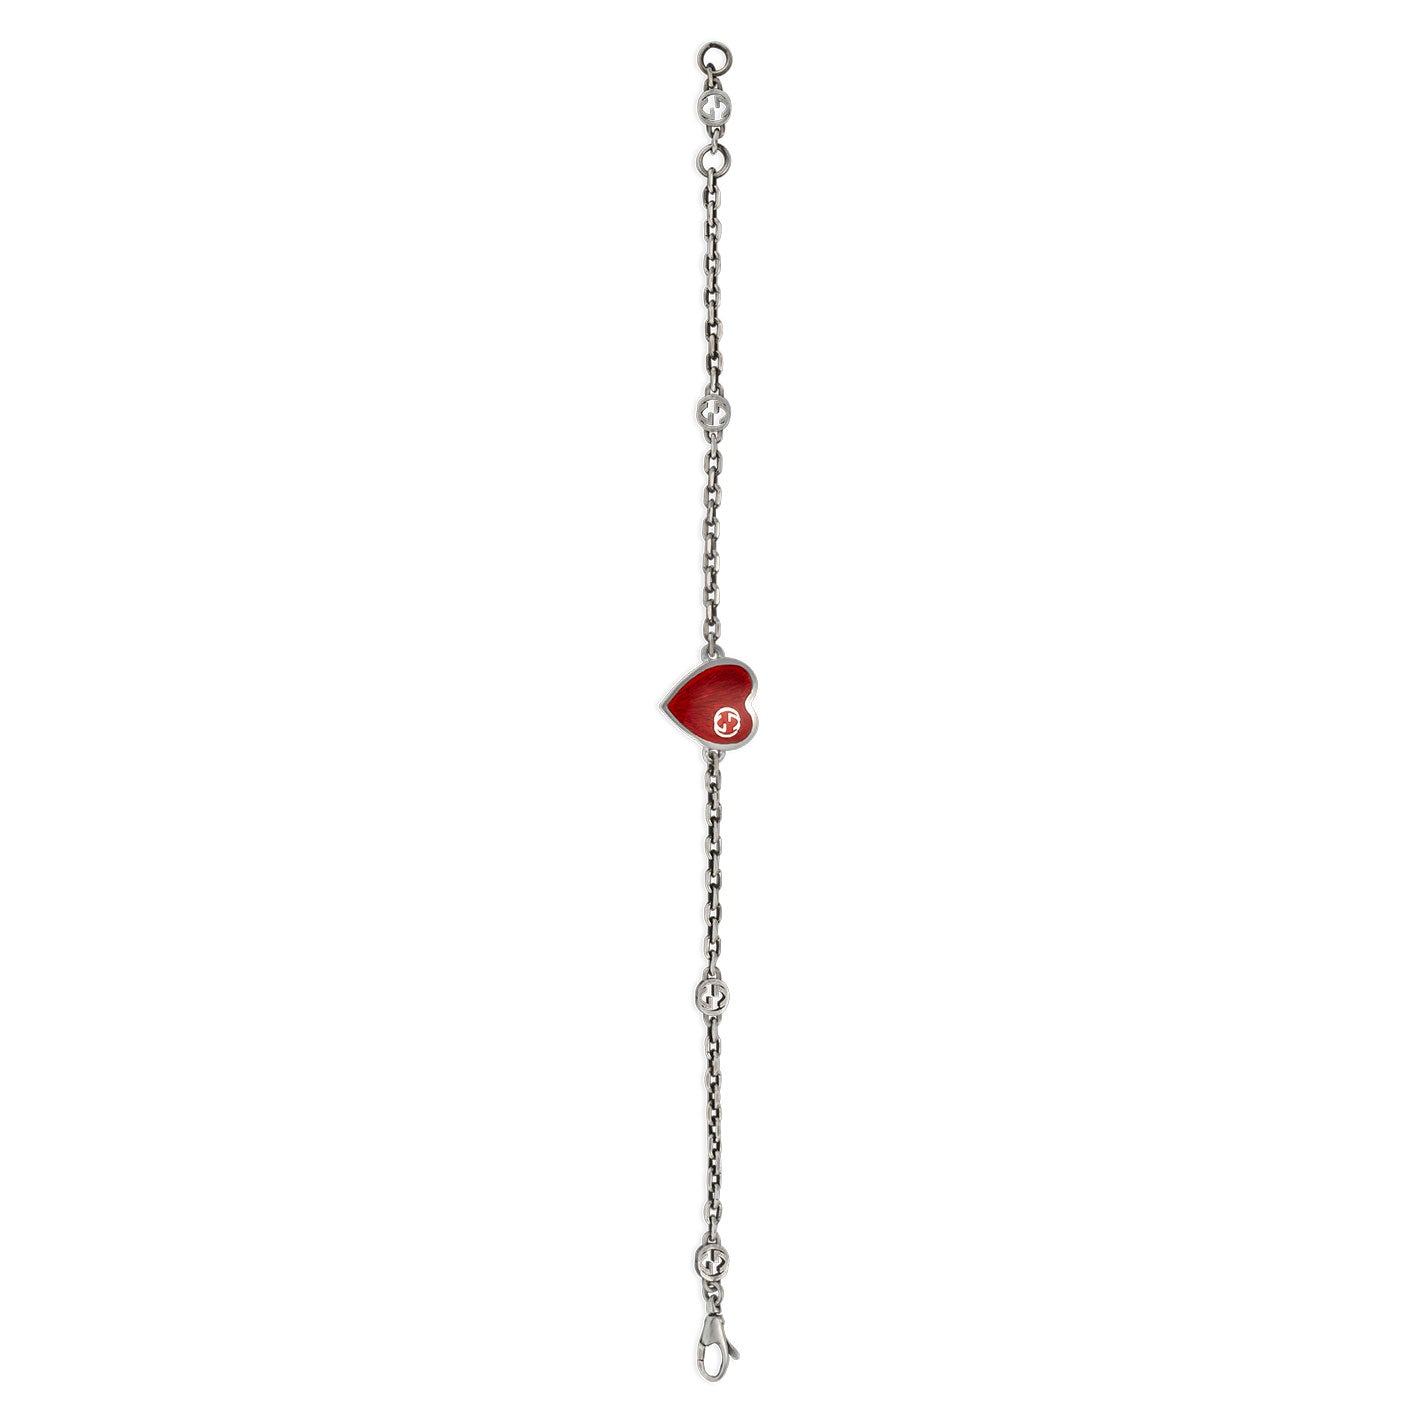 Gucci Interlocking G Sterling Silver Station Bracelet with Red Enamel Heart Pendant